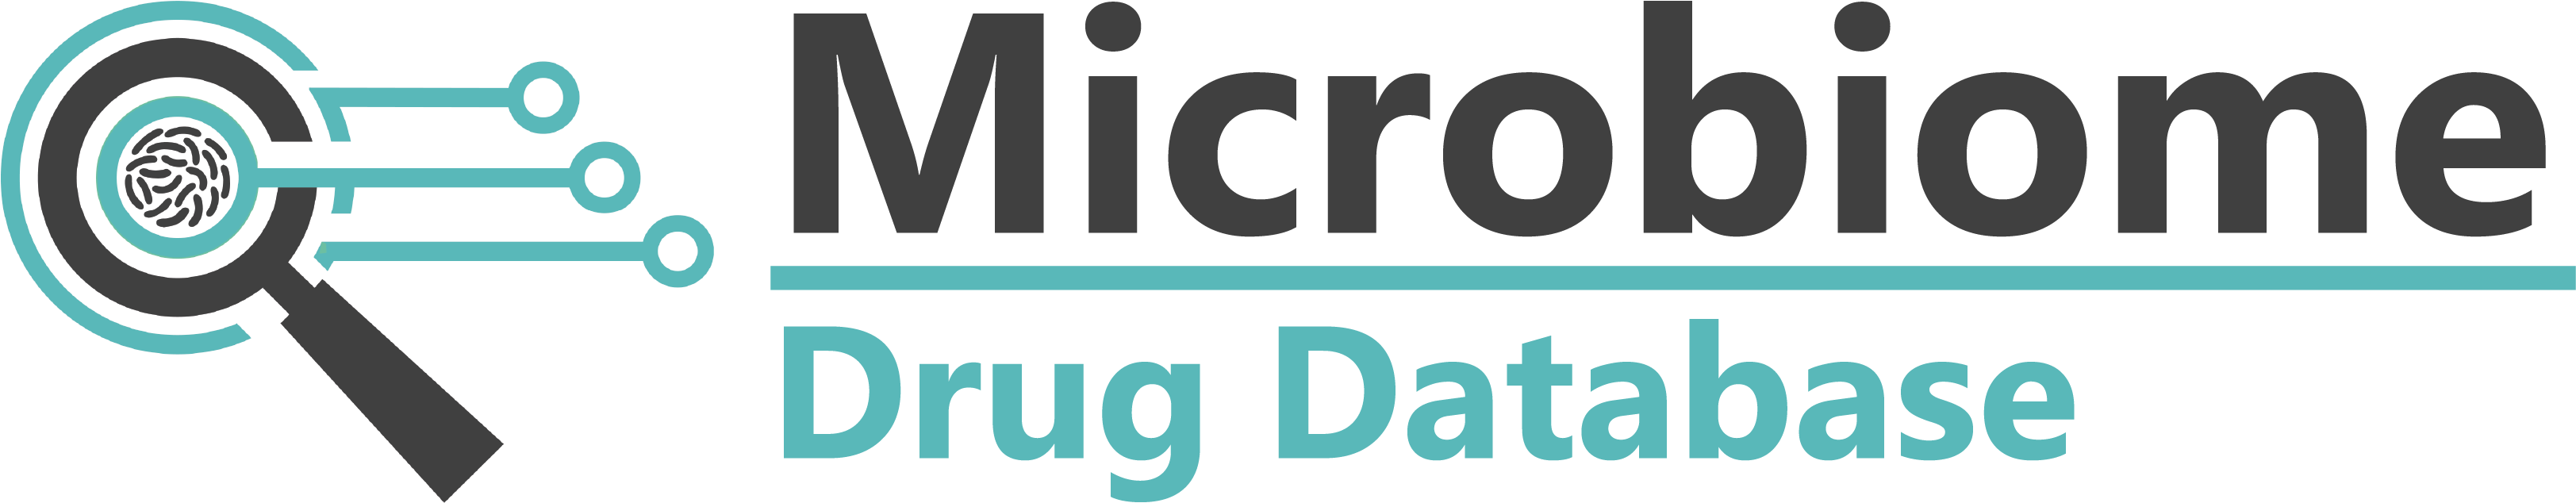 Drug Database - Microbiome Times Magazine